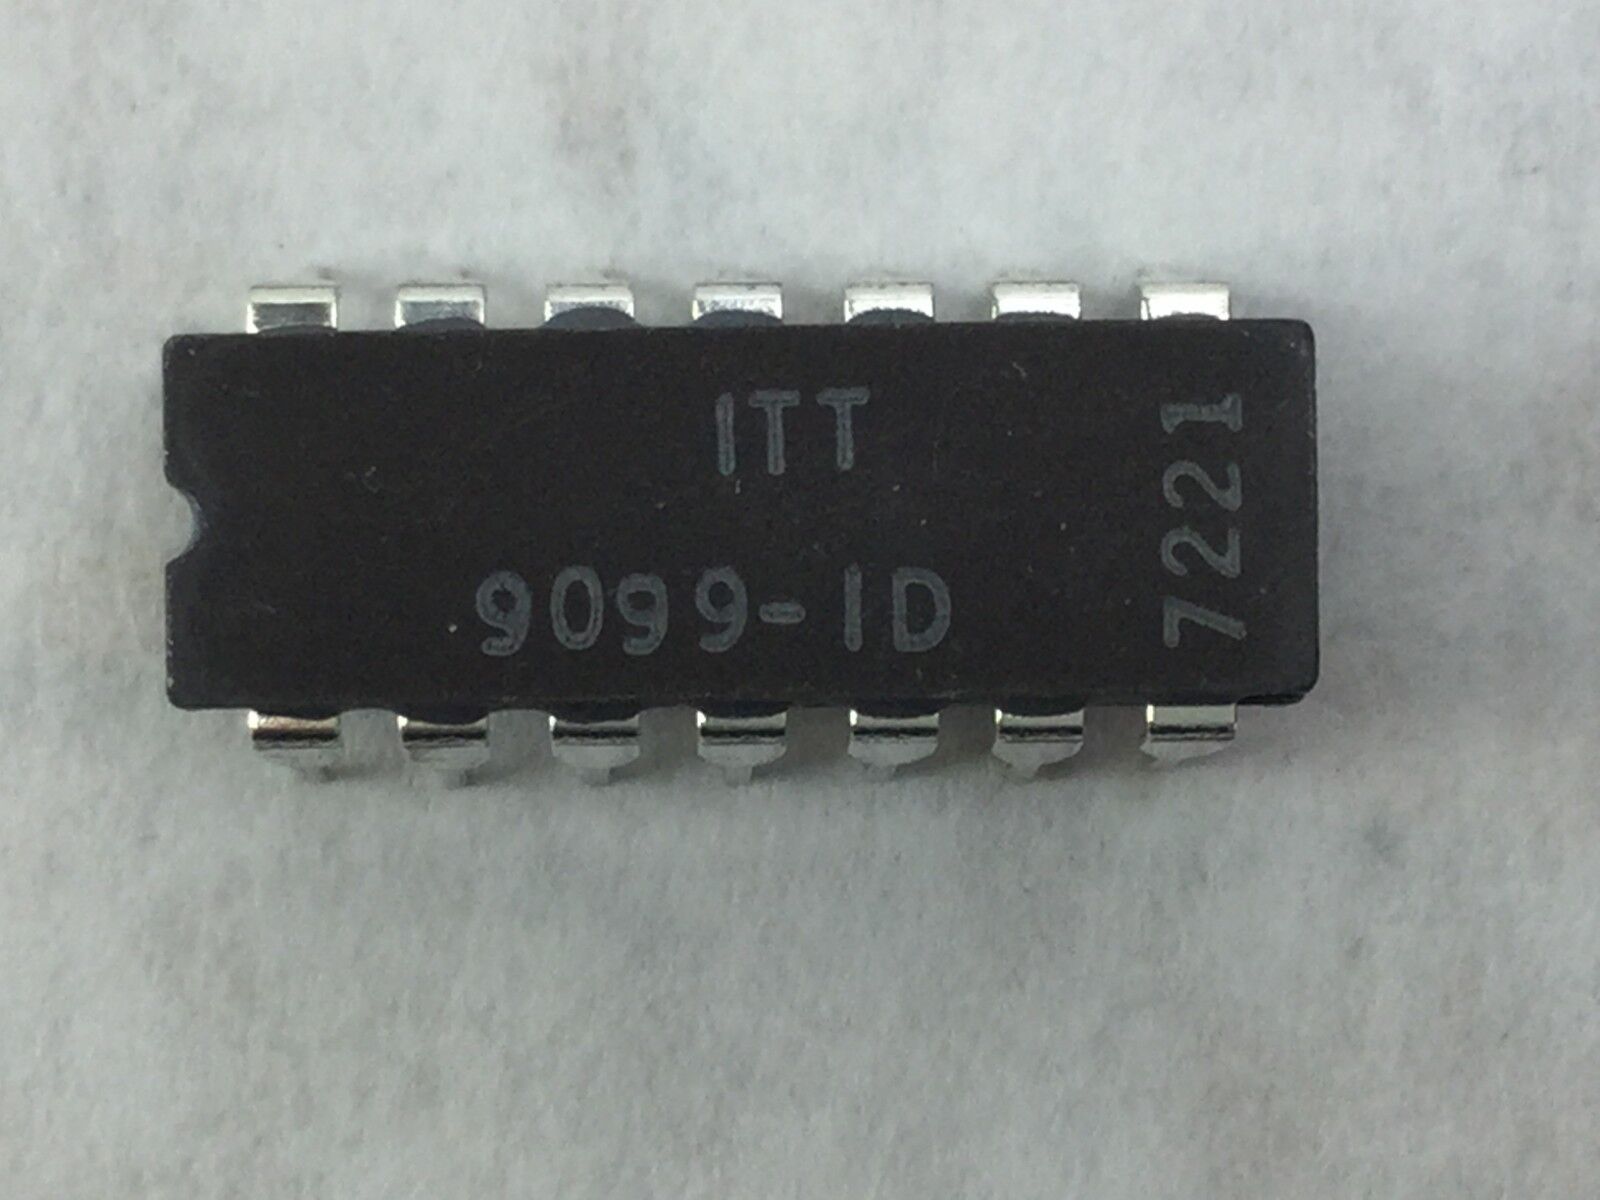 Genuine ITT 9099-1D Integrated Circuits  Lot of 25